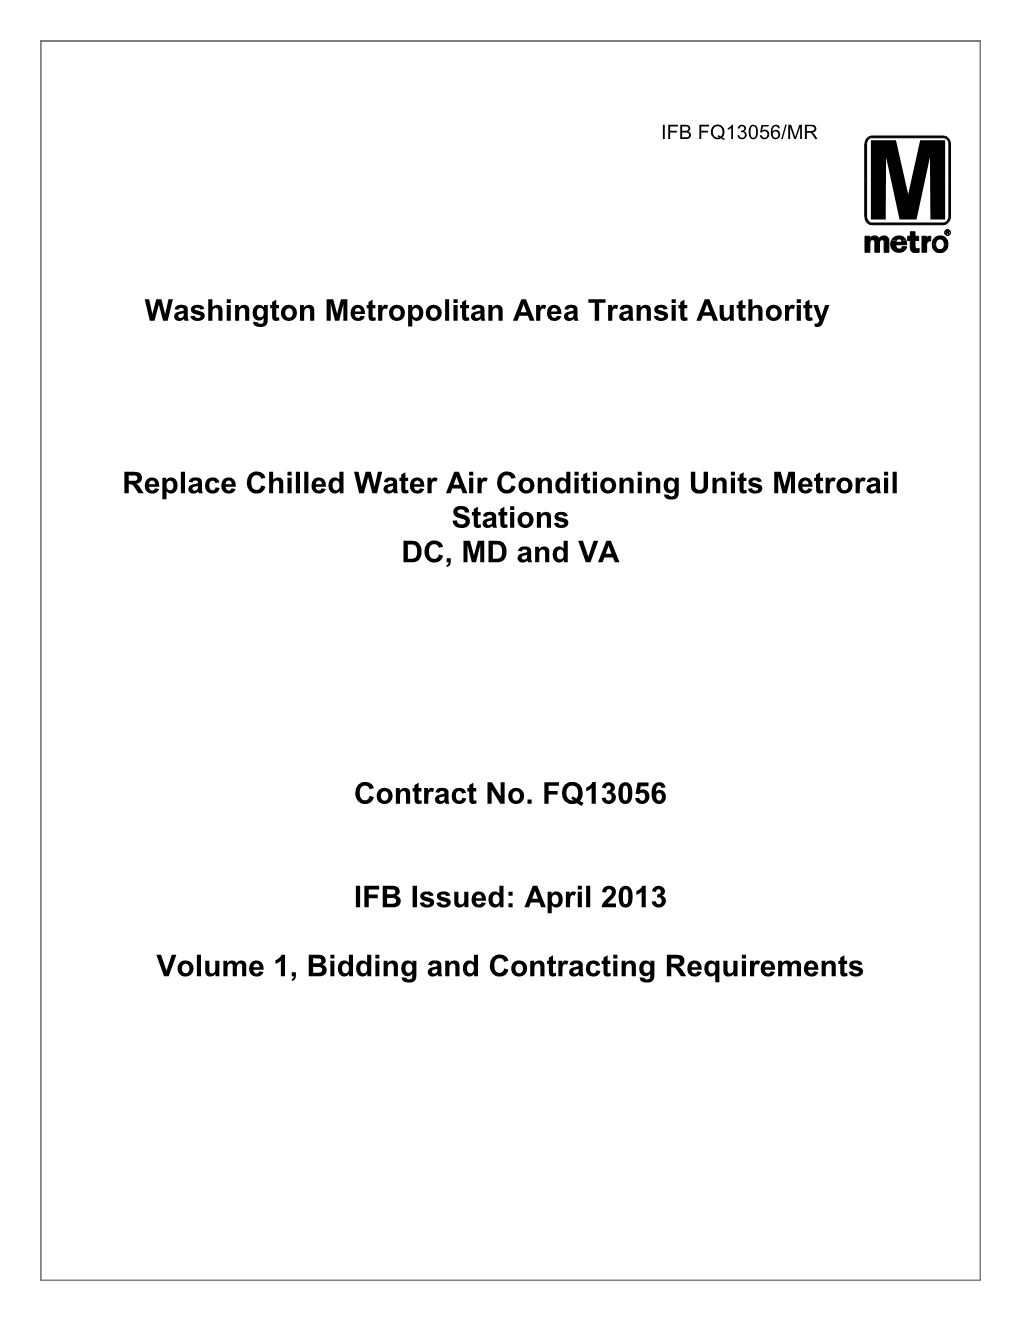 Washington Metropolitan Area Transit Authority Replace Chilled Water Air